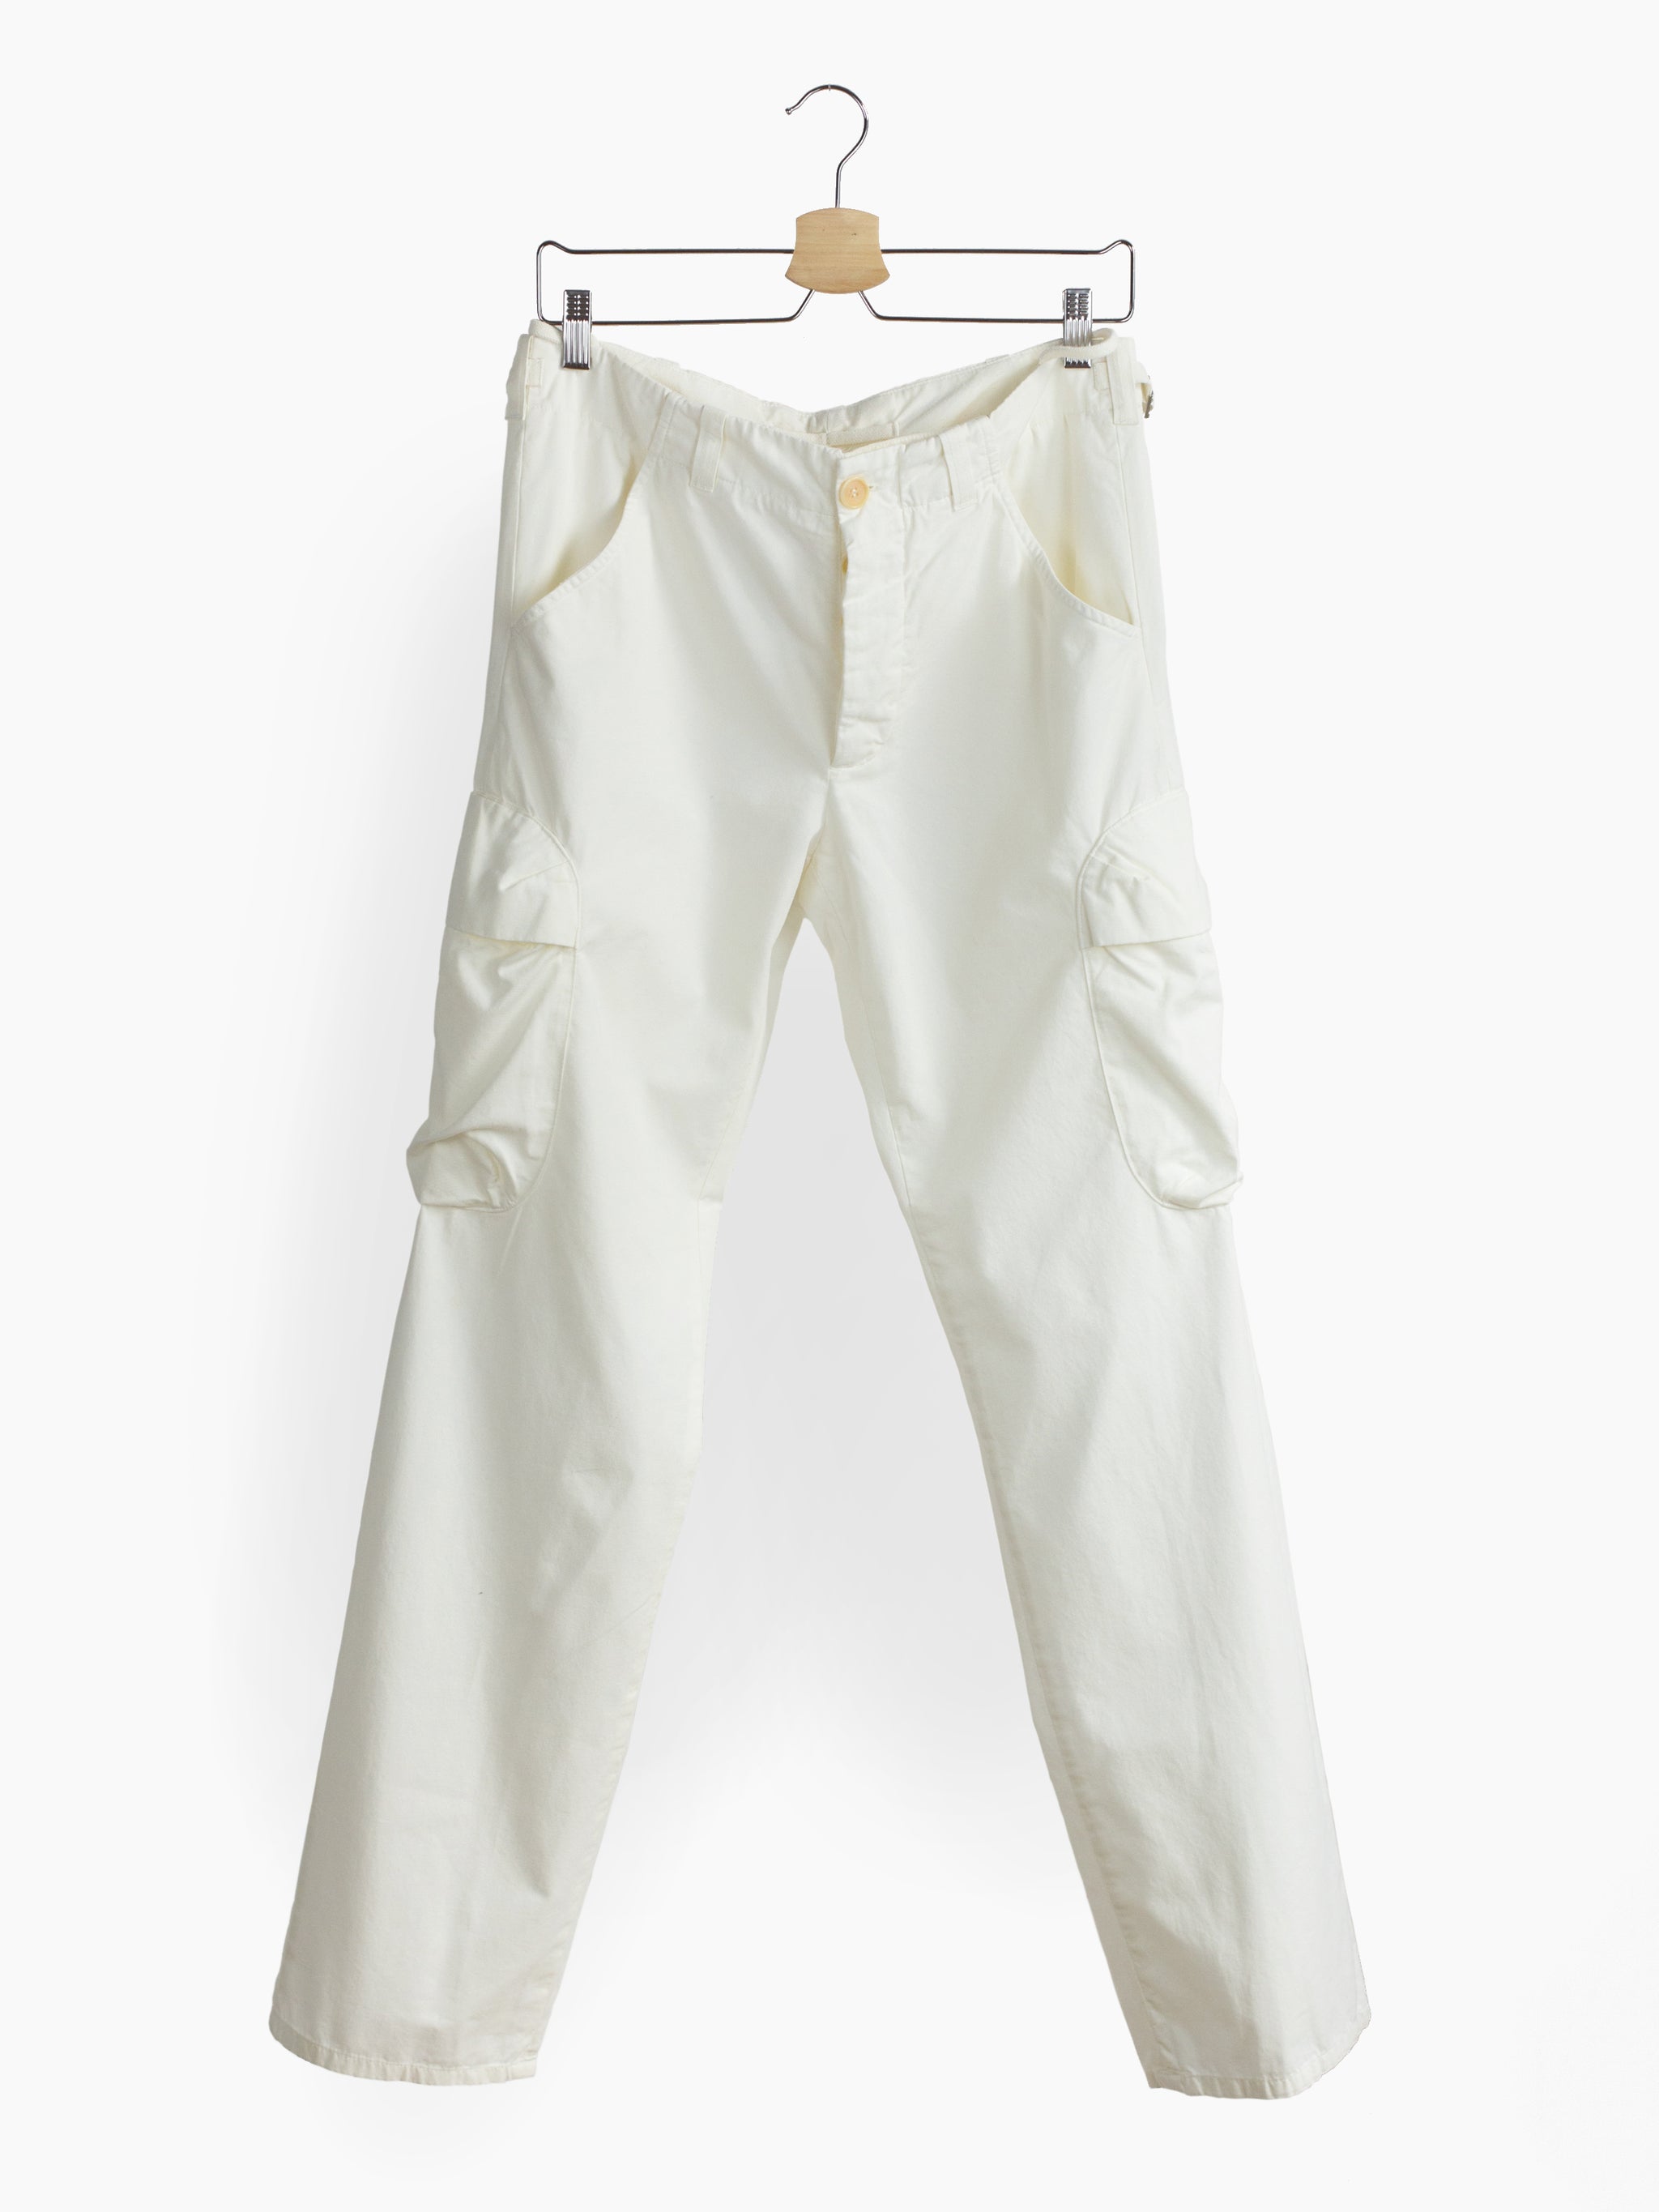 HELMUT LANG Trousers Masc Hi Elegant Peach Size Women: 31W, Men: 34W Unisex  | eBay